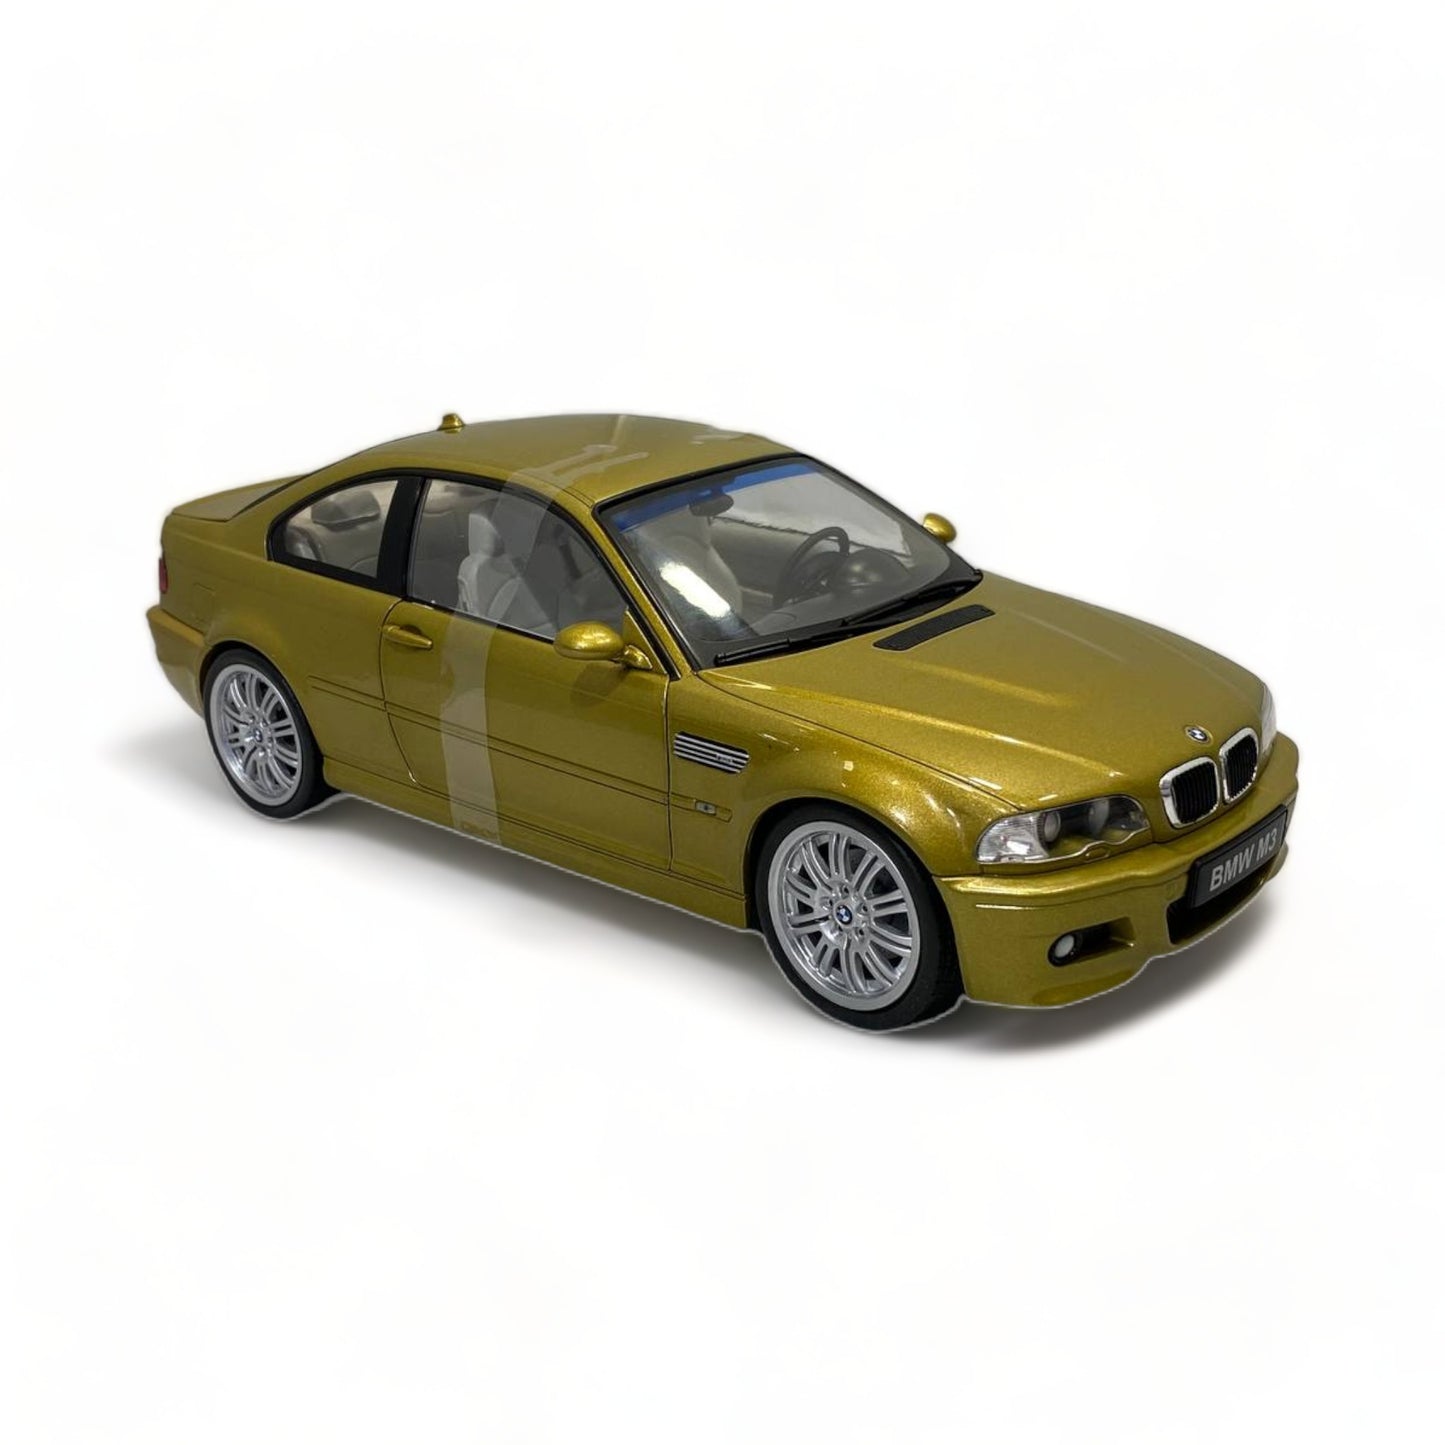 1/18 Diecast Solido BMW M3 E46 GOLD 2000 Scale Model Car